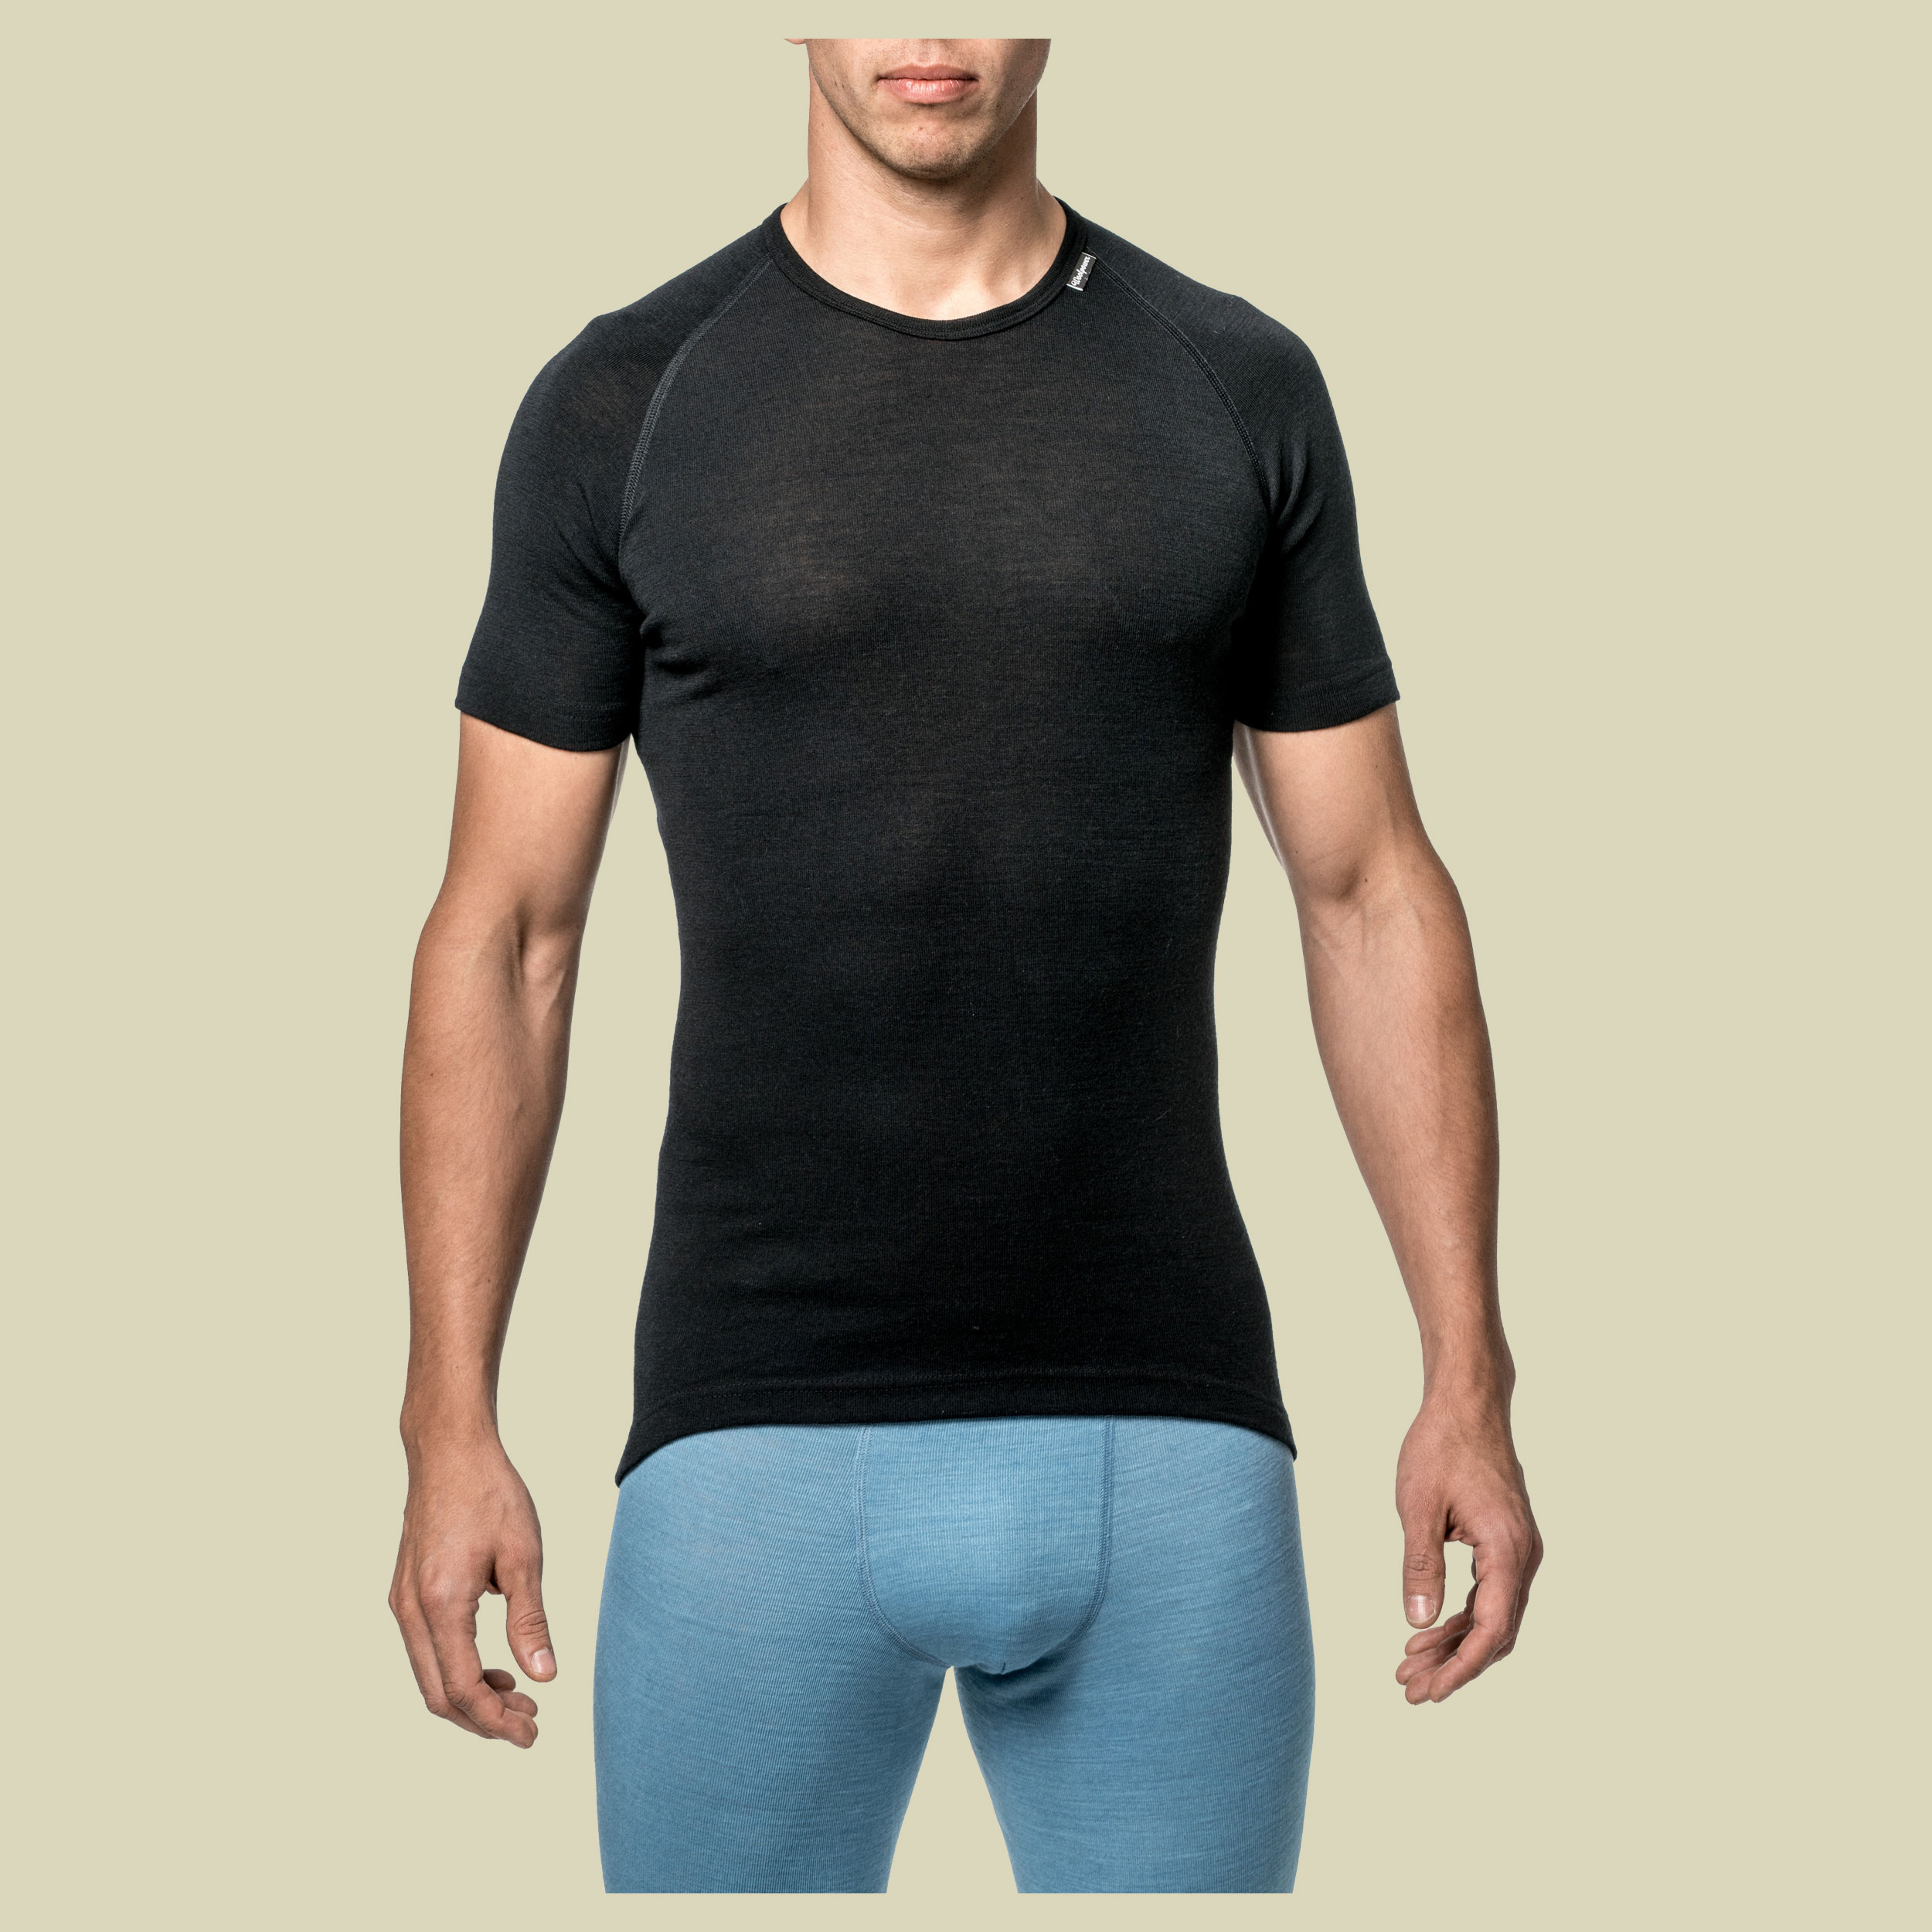 Lite T-Shirt XL schwarz - Farbe black